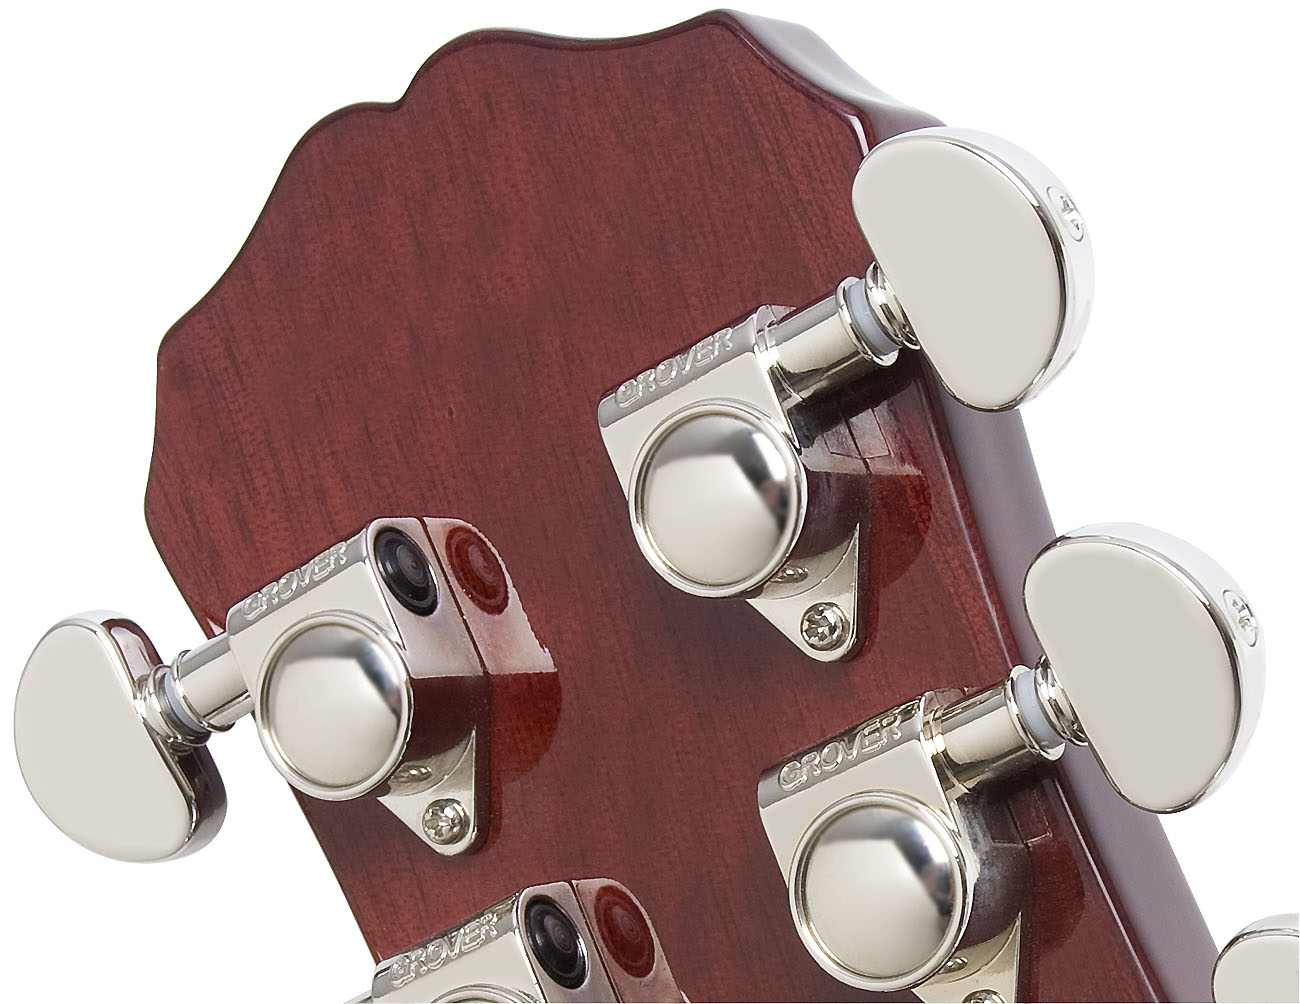 Epiphone Les Paul Standard Hh Ht Pf - Metallic Gold - Single cut electric guitar - Variation 3